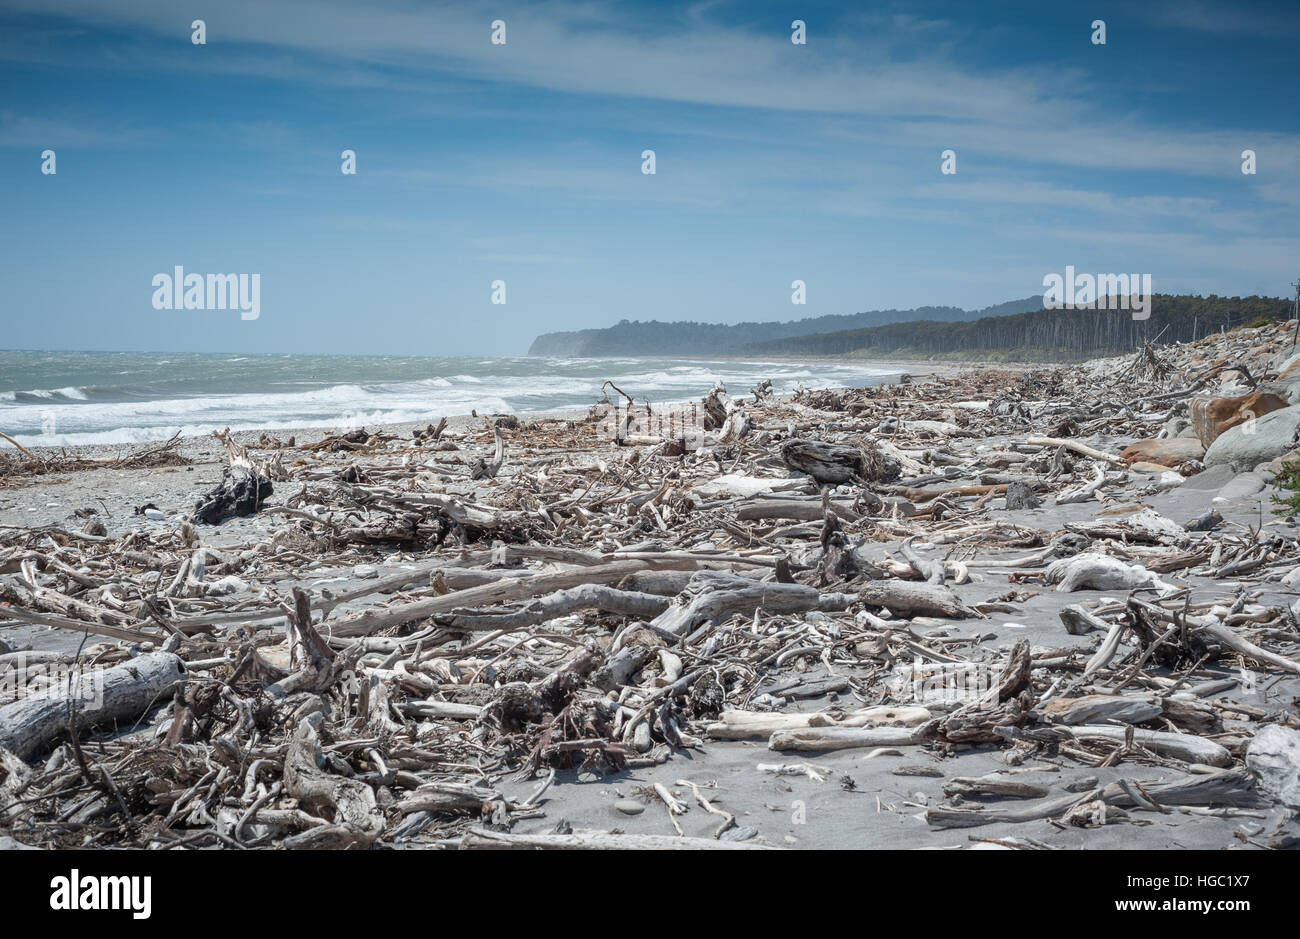 Driftwood beach, West Coast, South Island, New Zealand Banque D'Images